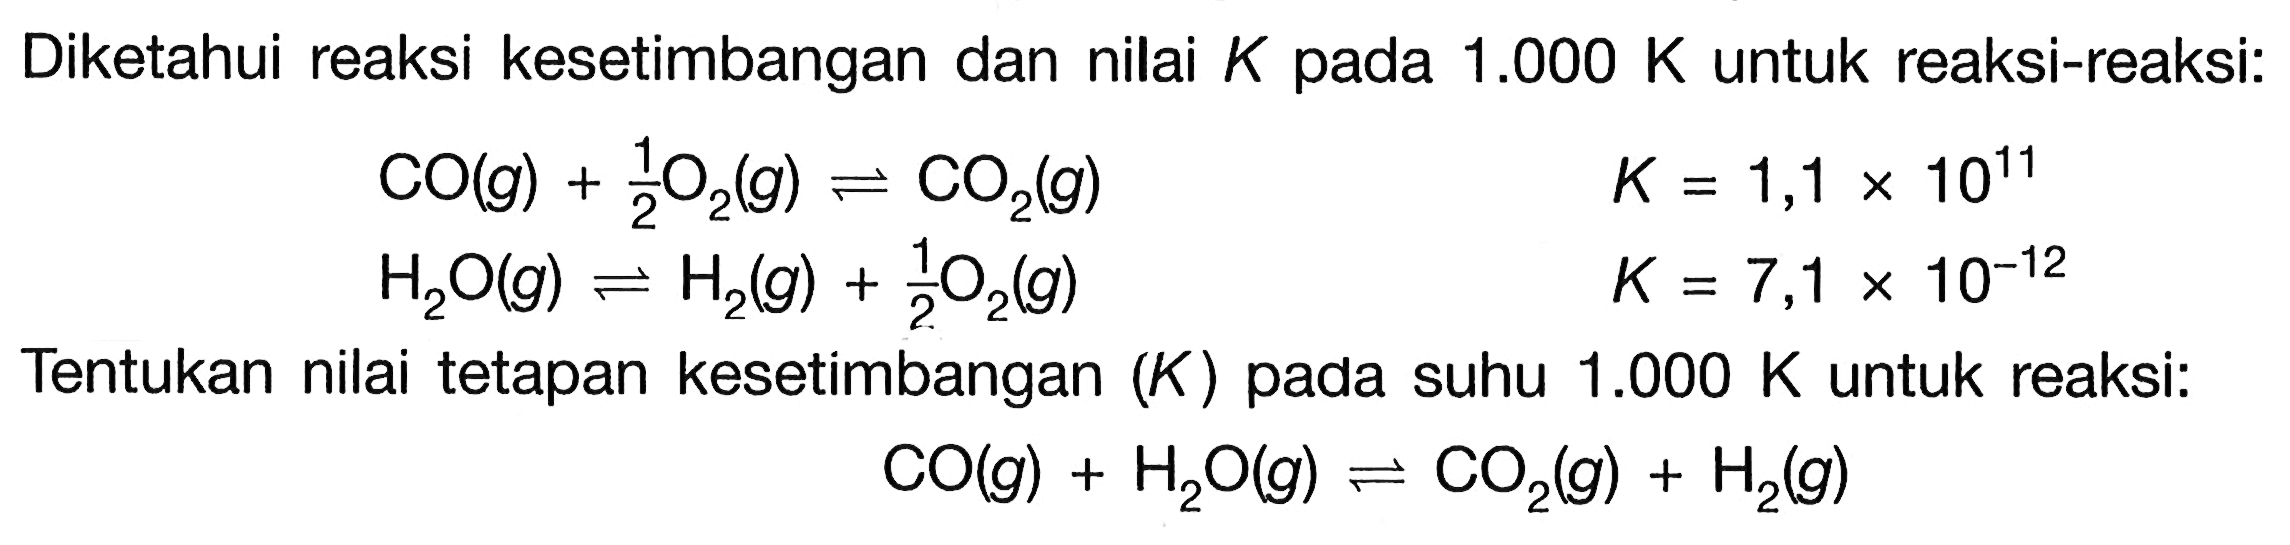 Diketahui reaksi kesetimbangan dan nilai  K  pada  1.000 K  untuk reaksi-reaksi: CO(g)+1/2 O2(g) <-> CO2(g)  K=1,1 x 10^11  H2O(g) <-> H2(g)+1/2 O2(g)  K=7,1 x 10^(-12) Tentukan nilai tetapan kesetimbangan  (K)  pada suhu  1.000 K  untuk reaksi: CO(g)+H2 O(g) <-> CO2(g)+H2(g)